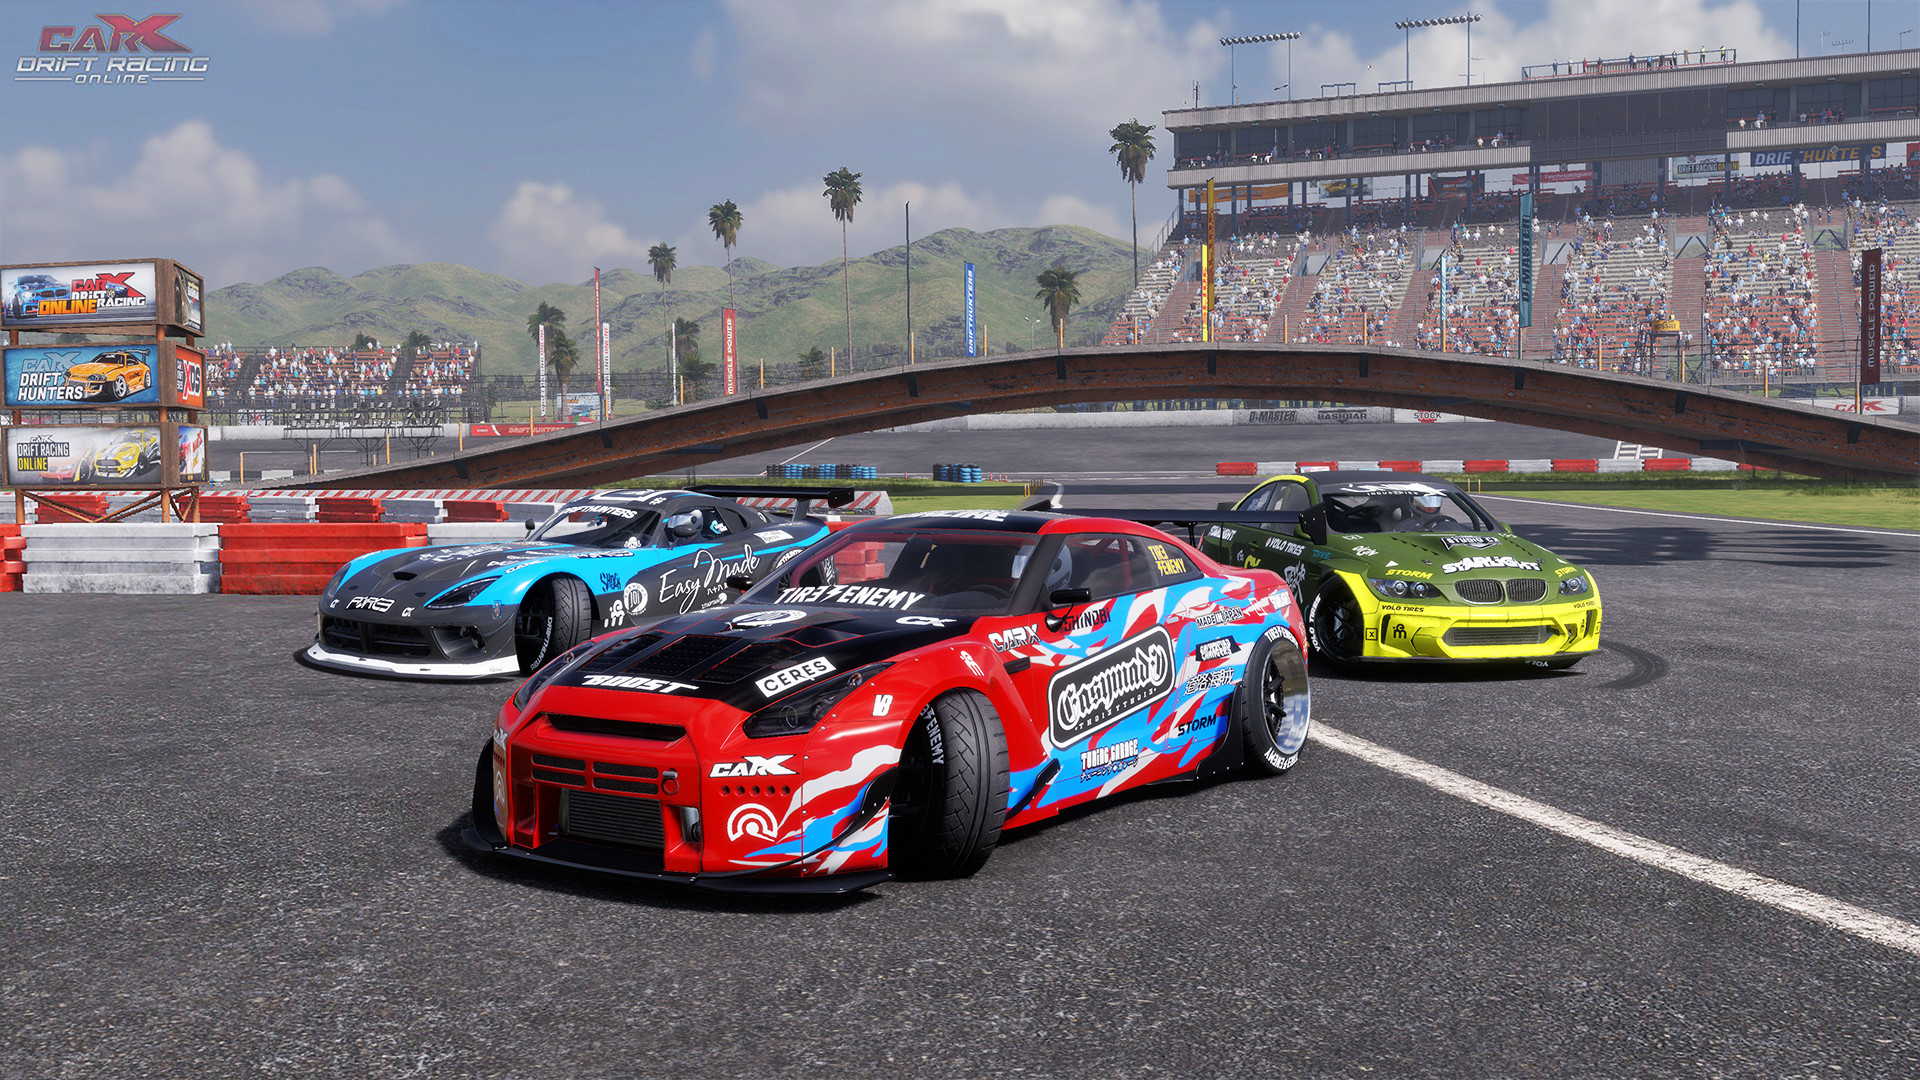 CarX Technologies on X: 🔥CarX Drift Racing Online 2.17.0 update